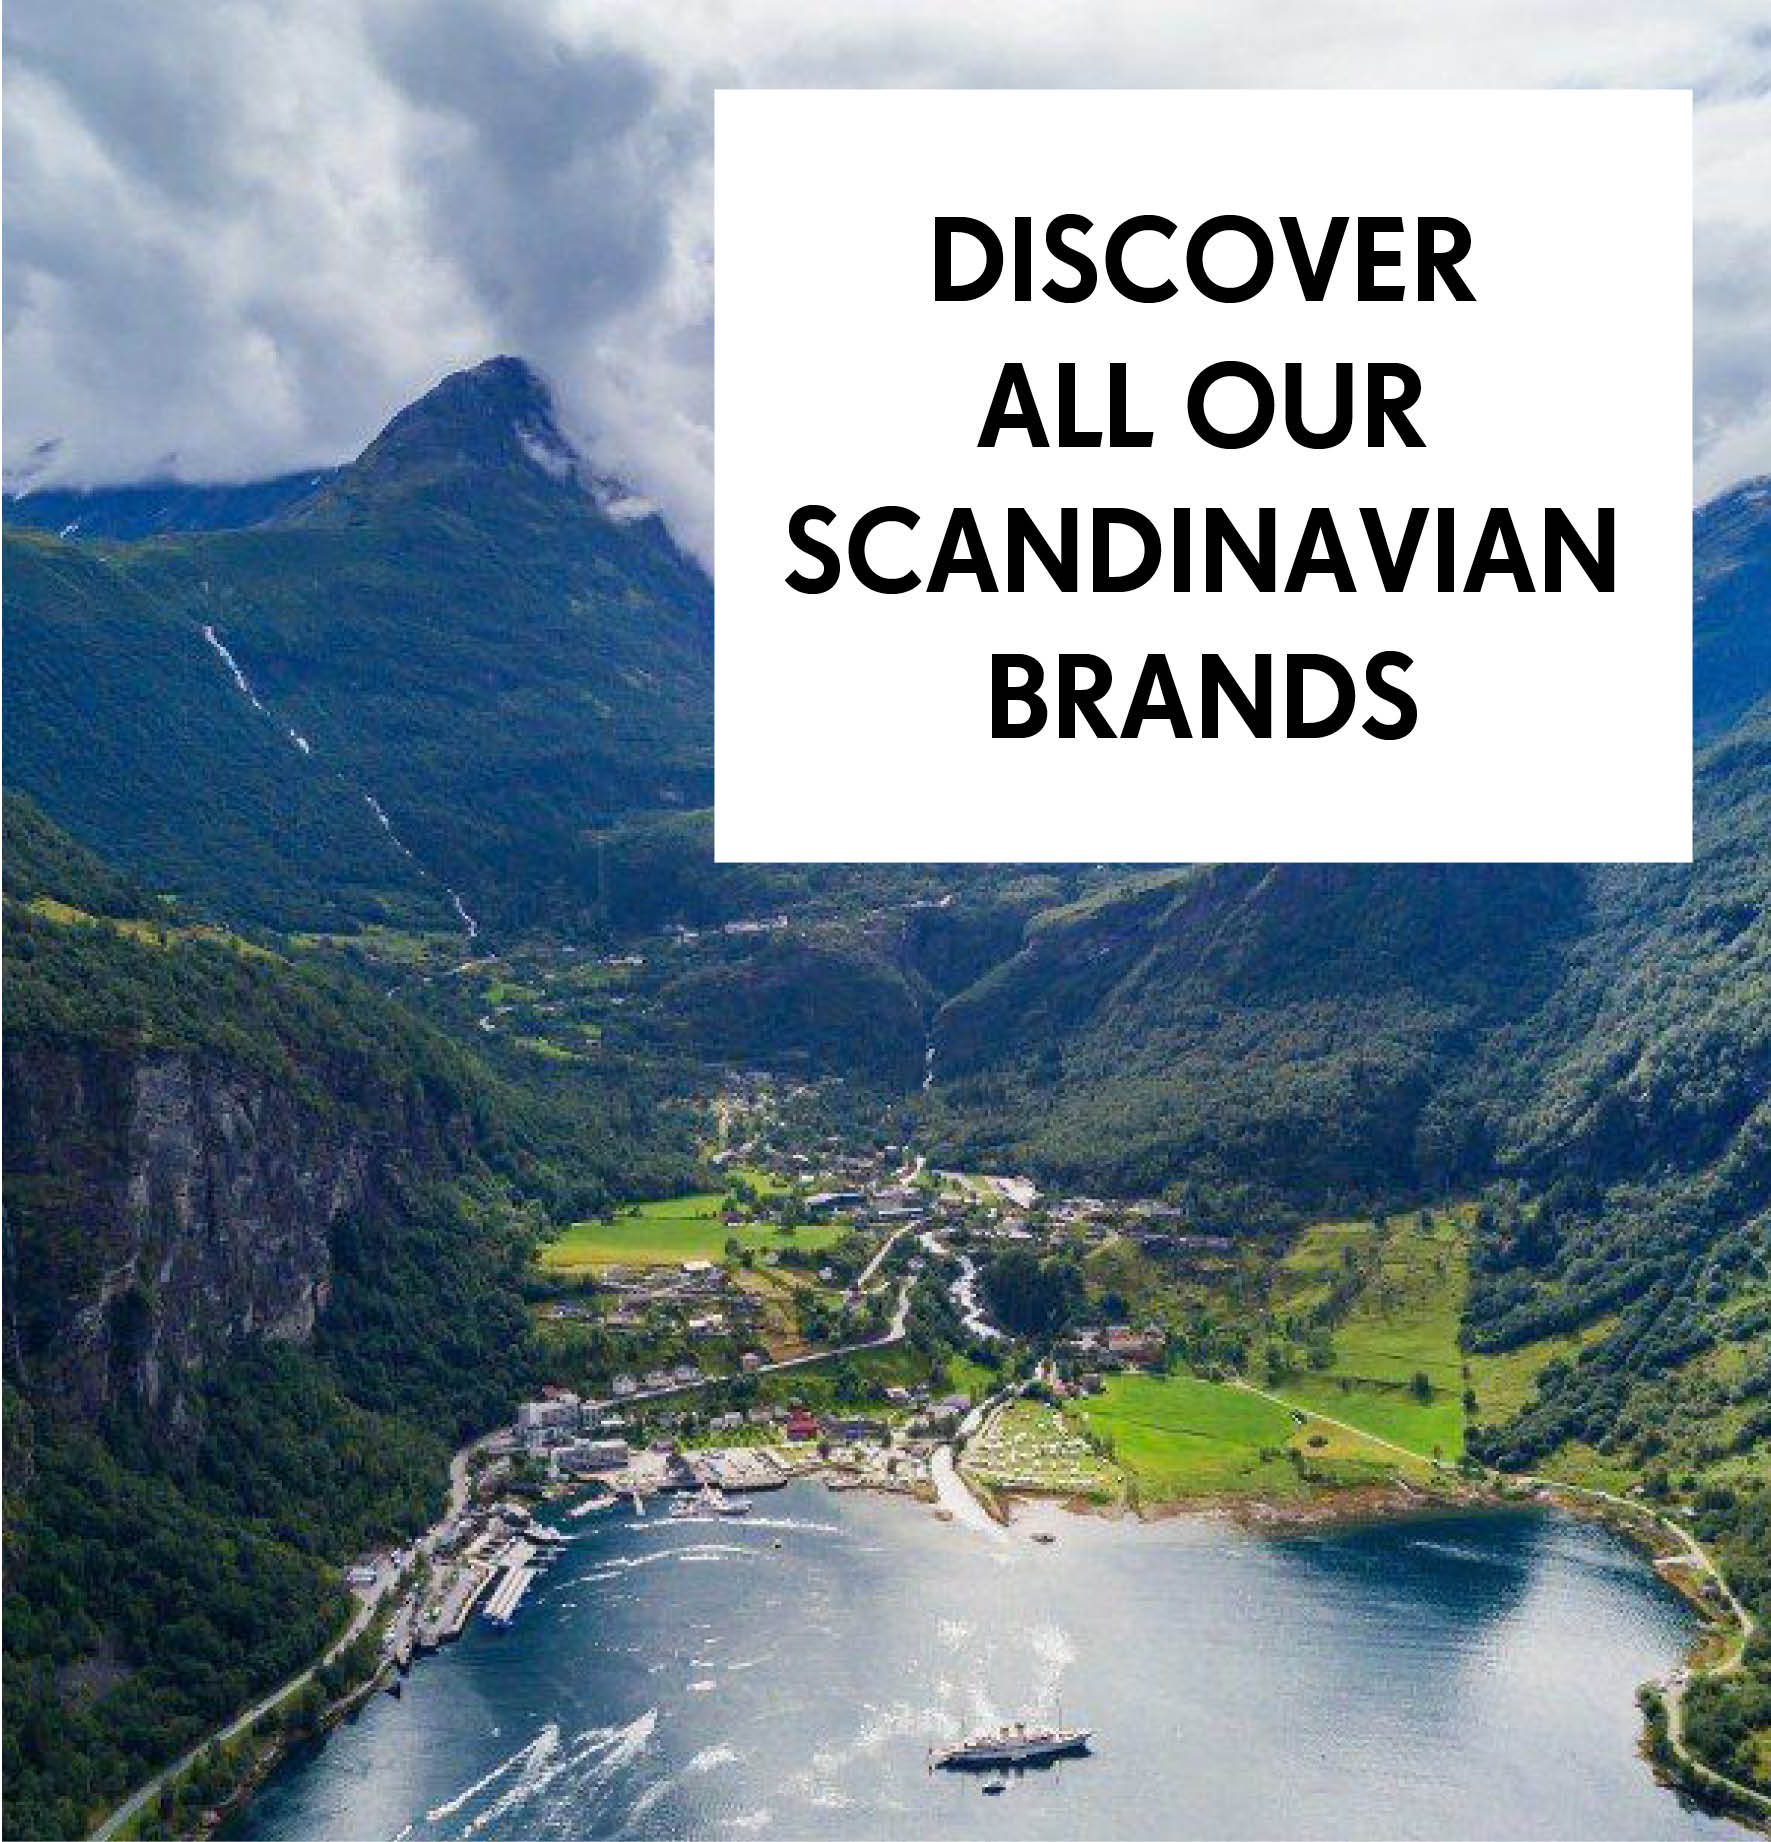 Scandinavian brands